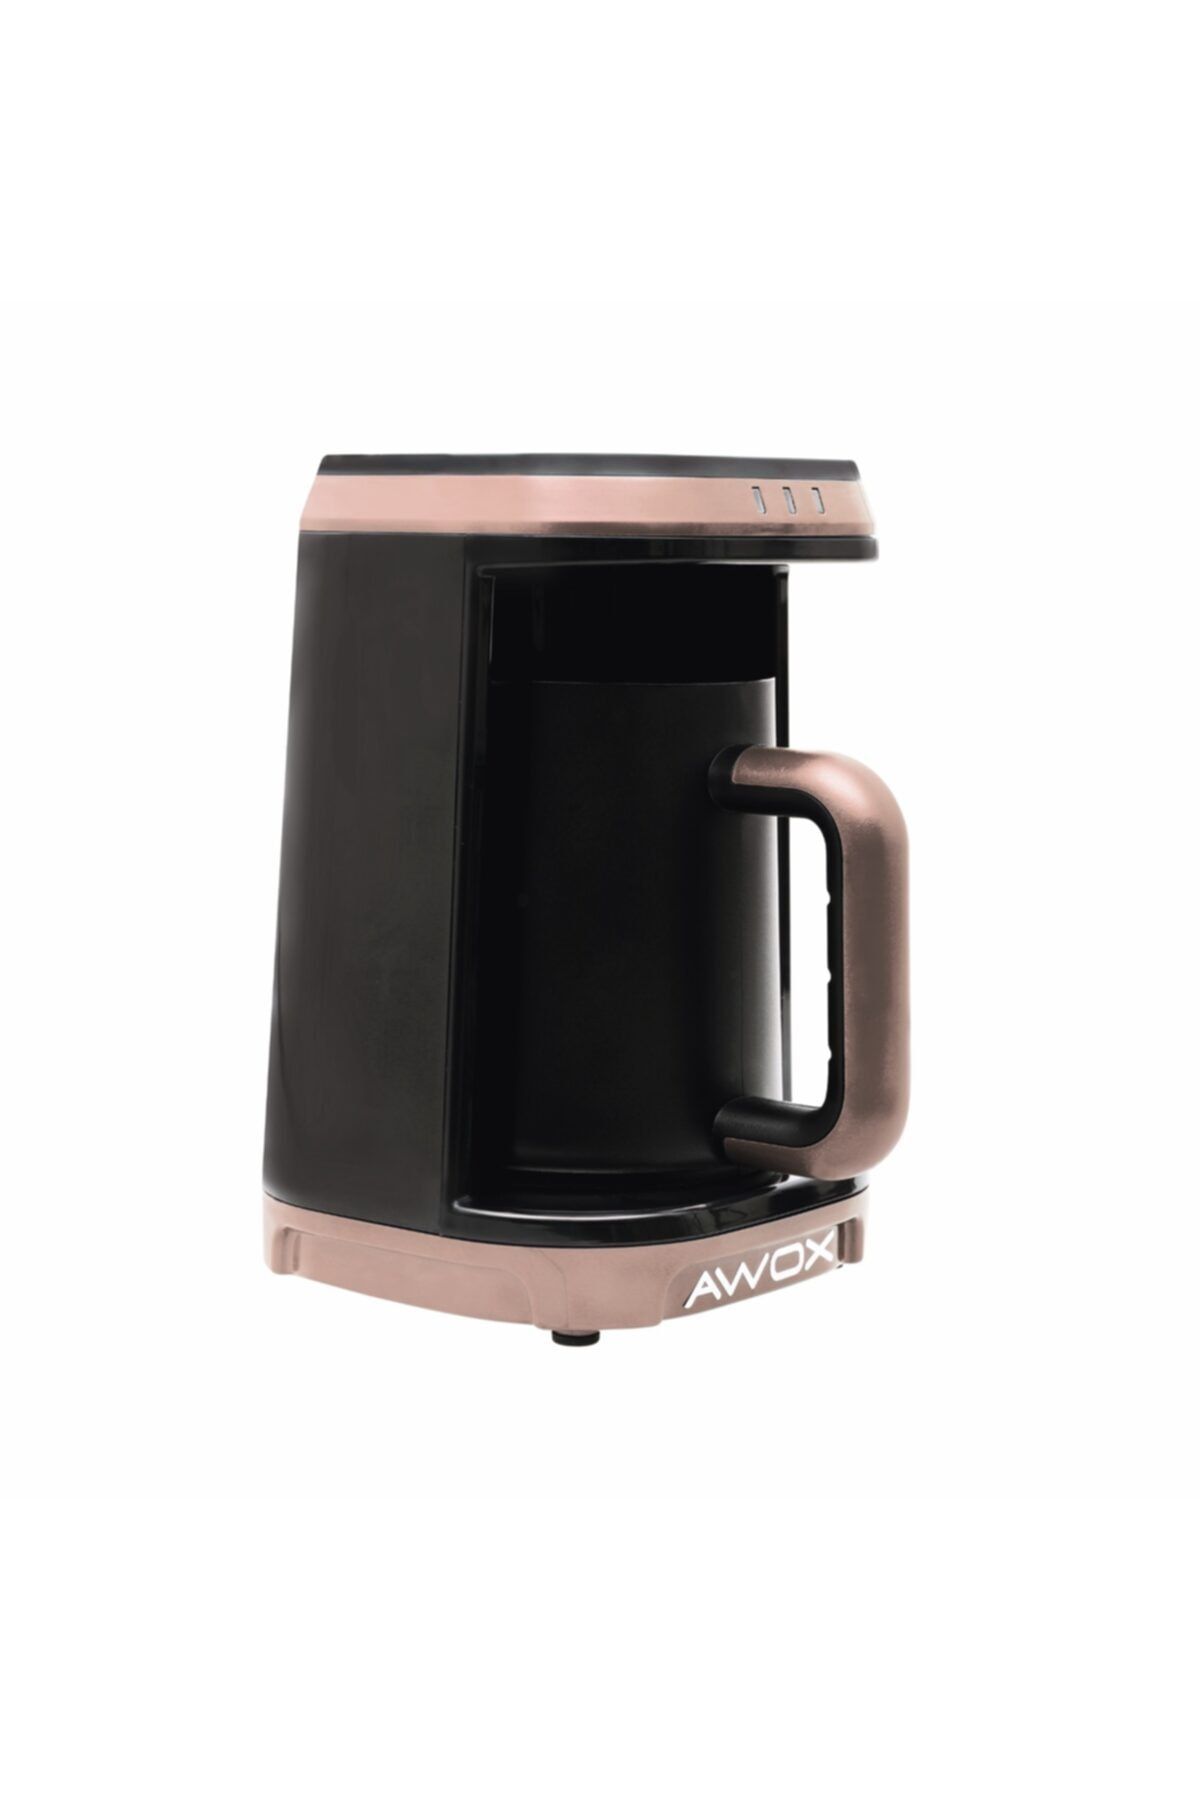 AWOX Rosegold Kafija Kahve Makinesi